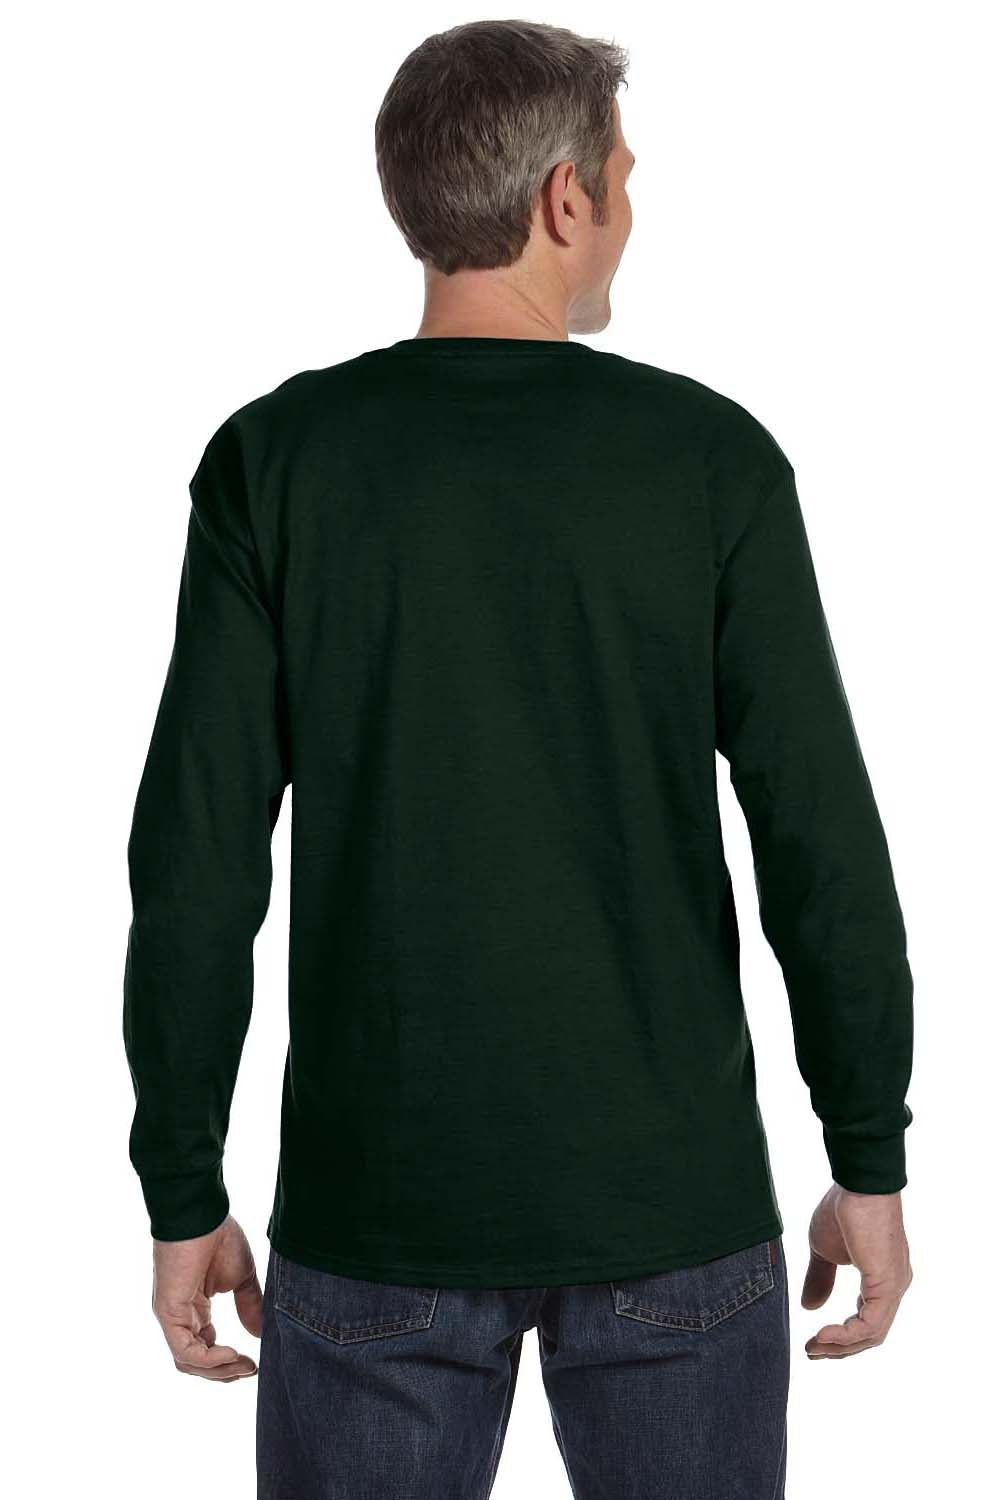 Hanes 5586 Mens ComfortSoft Long Sleeve Crewneck T-Shirt Forest Green Back